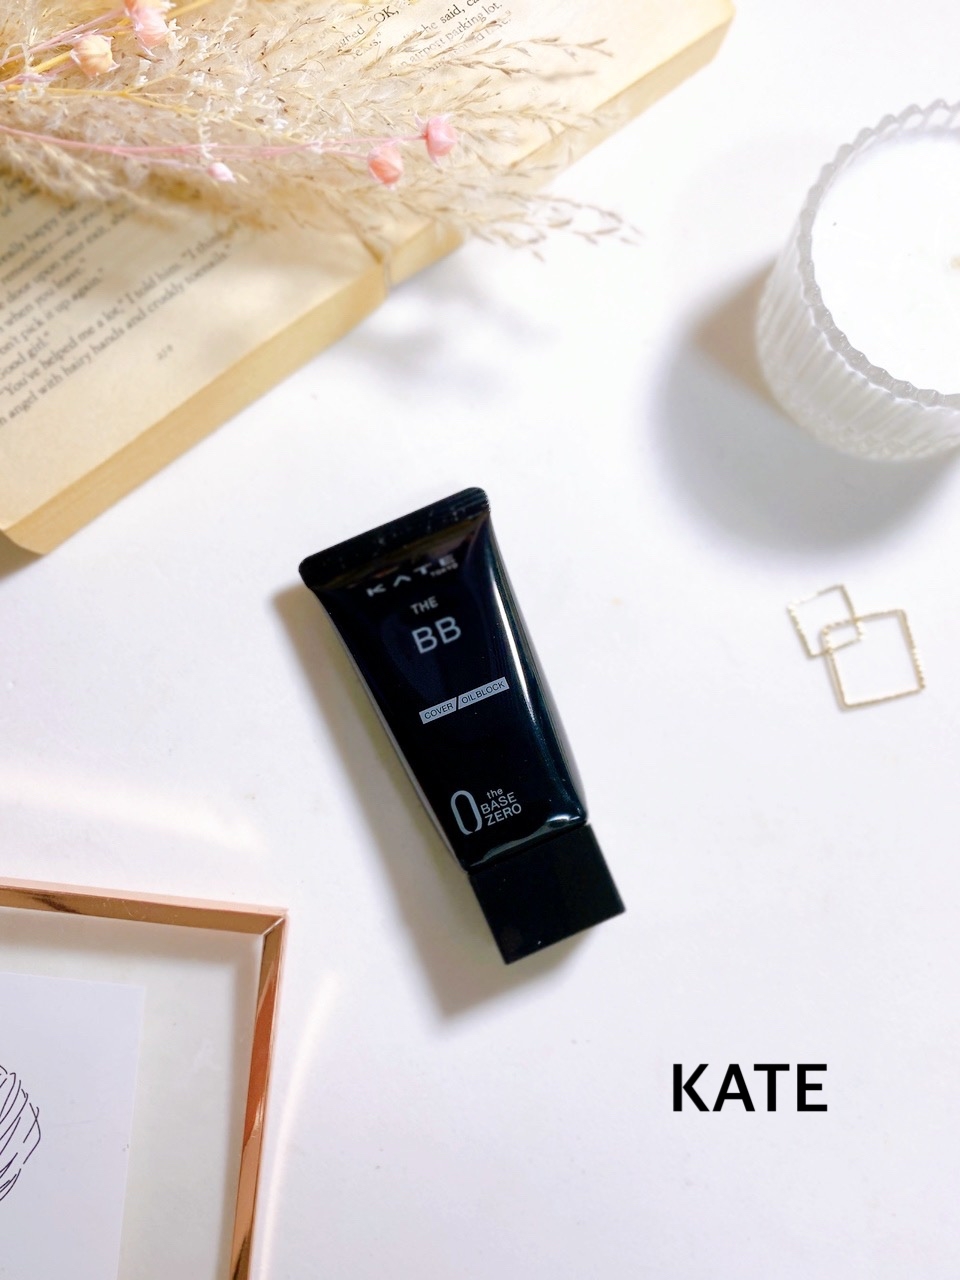 KATE(ケイト) ザBB (カバー&オイルブロック)の良い点・メリットに関する日高あきさんの口コミ画像2